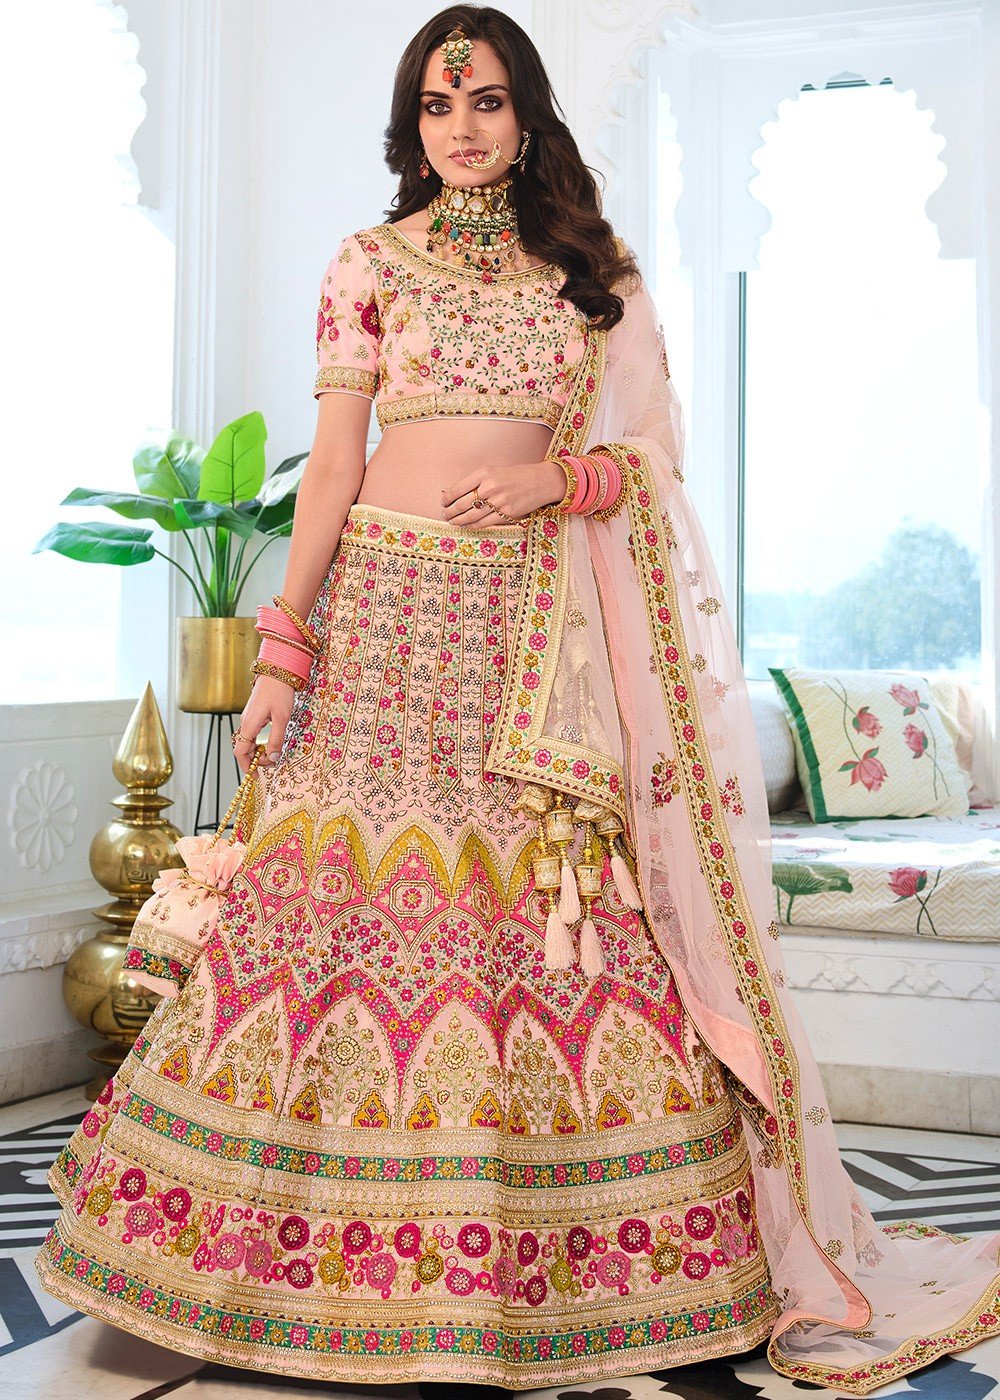 ETHNIC EMPORIUM Indian Royal wedding Peach Crepe Zari & Diamond Ghagra Engagement  Lehenga Choli Net Dupatta 1499 3 at Amazon Women's Clothing store